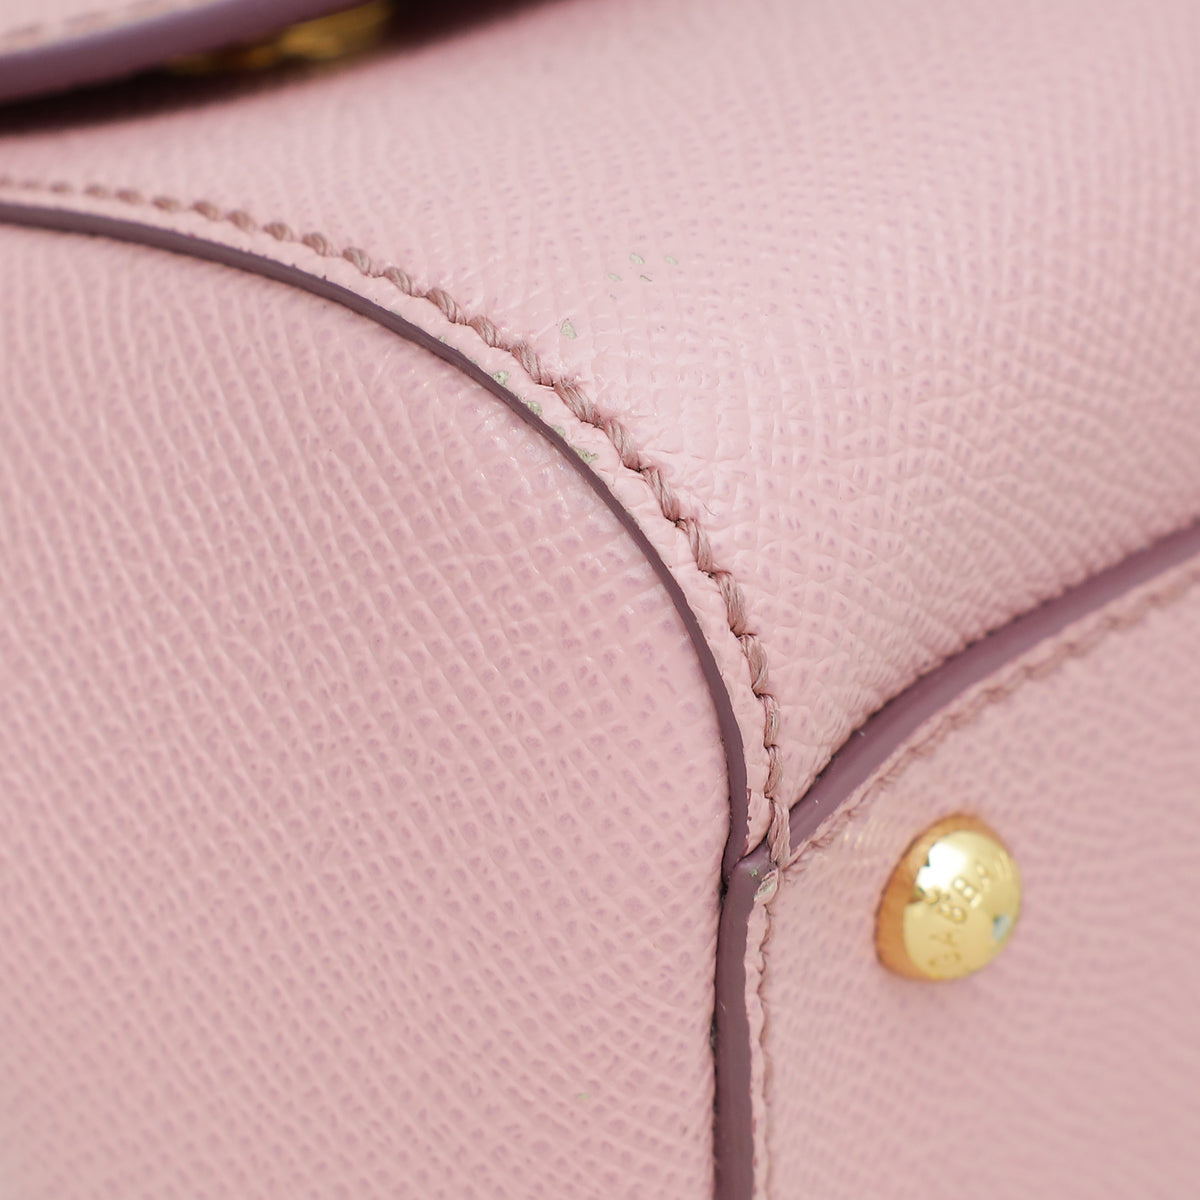 Dolce & Gabbana Light Pink Dauphine Sicily Medium Bag